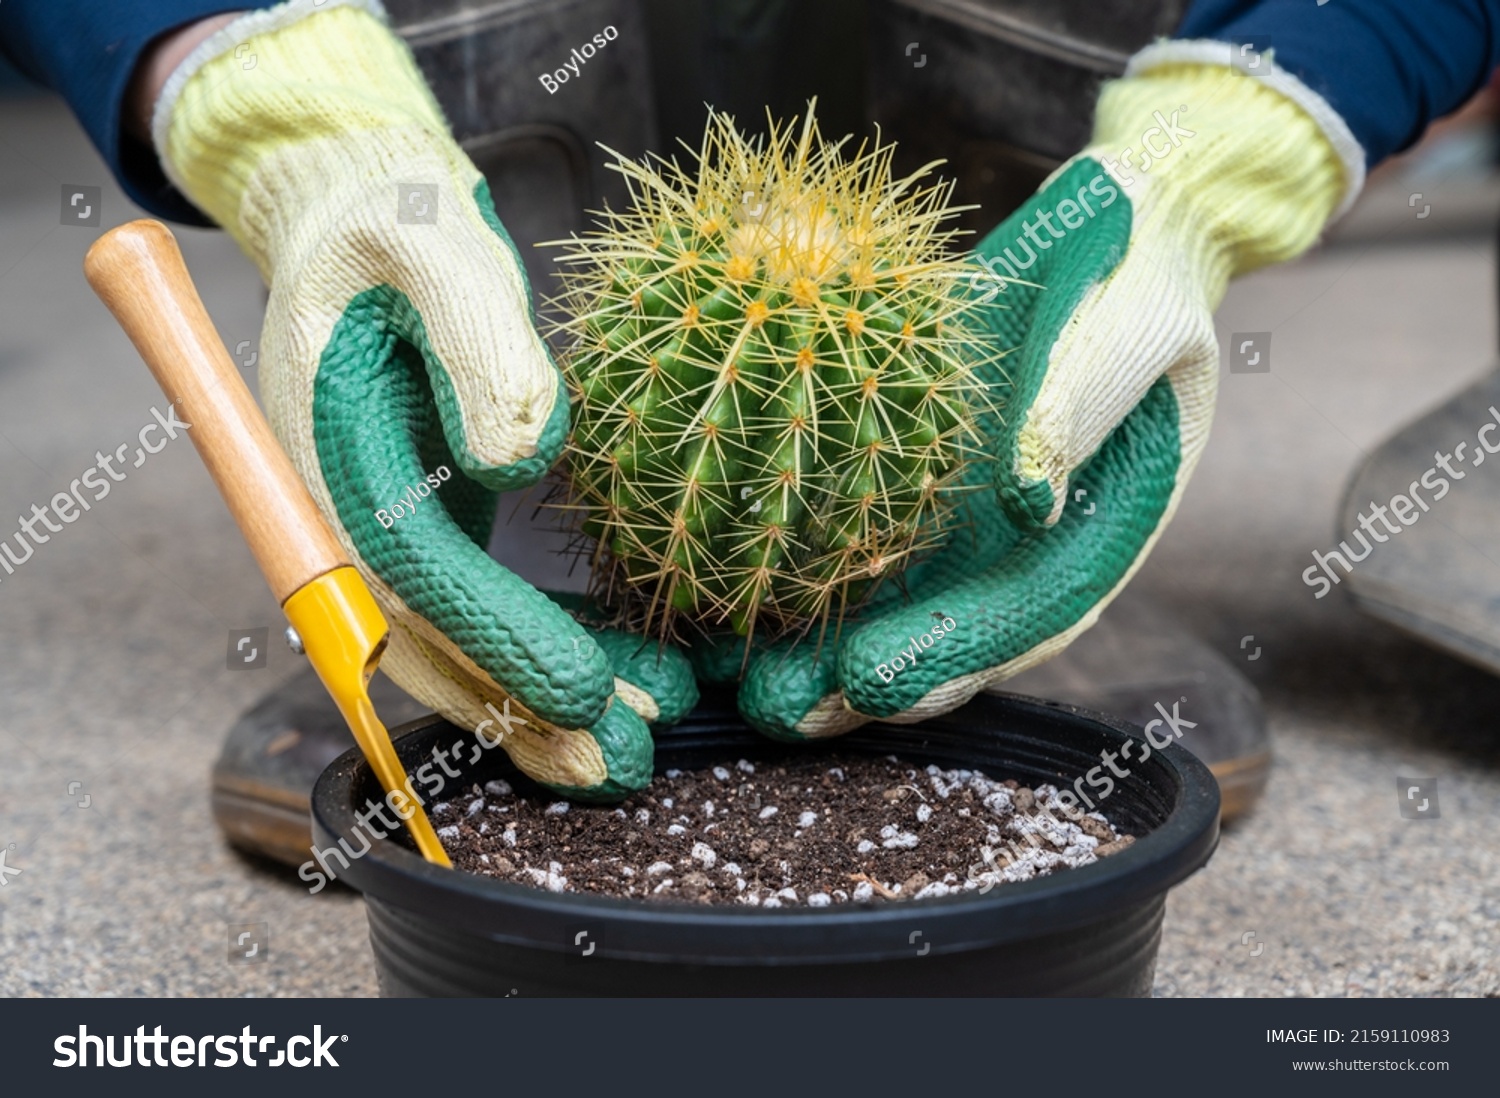 Farmer hands in protective gloves plant a golden barrel cactus in flower pot. Golden barrel cactus is popular for ornamental plant in contemporary garden designs. #2159110983